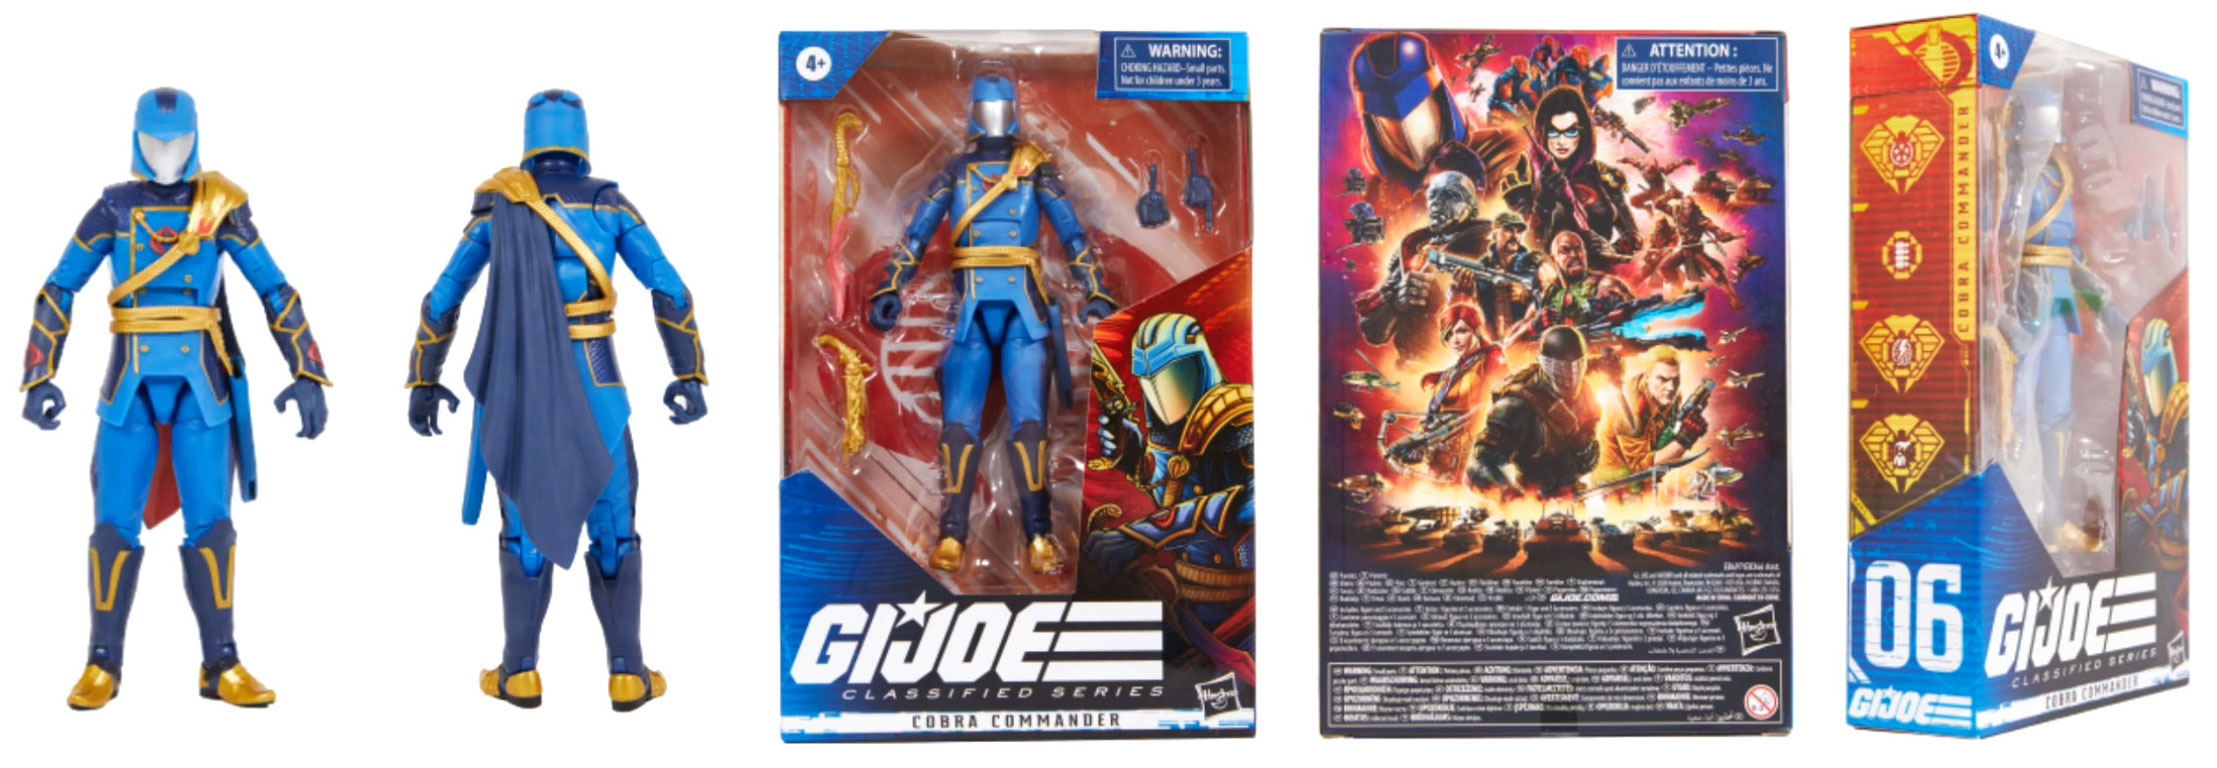 cobra-commander-ntwrk-gi-joe-classified-action-figure-box-packaging